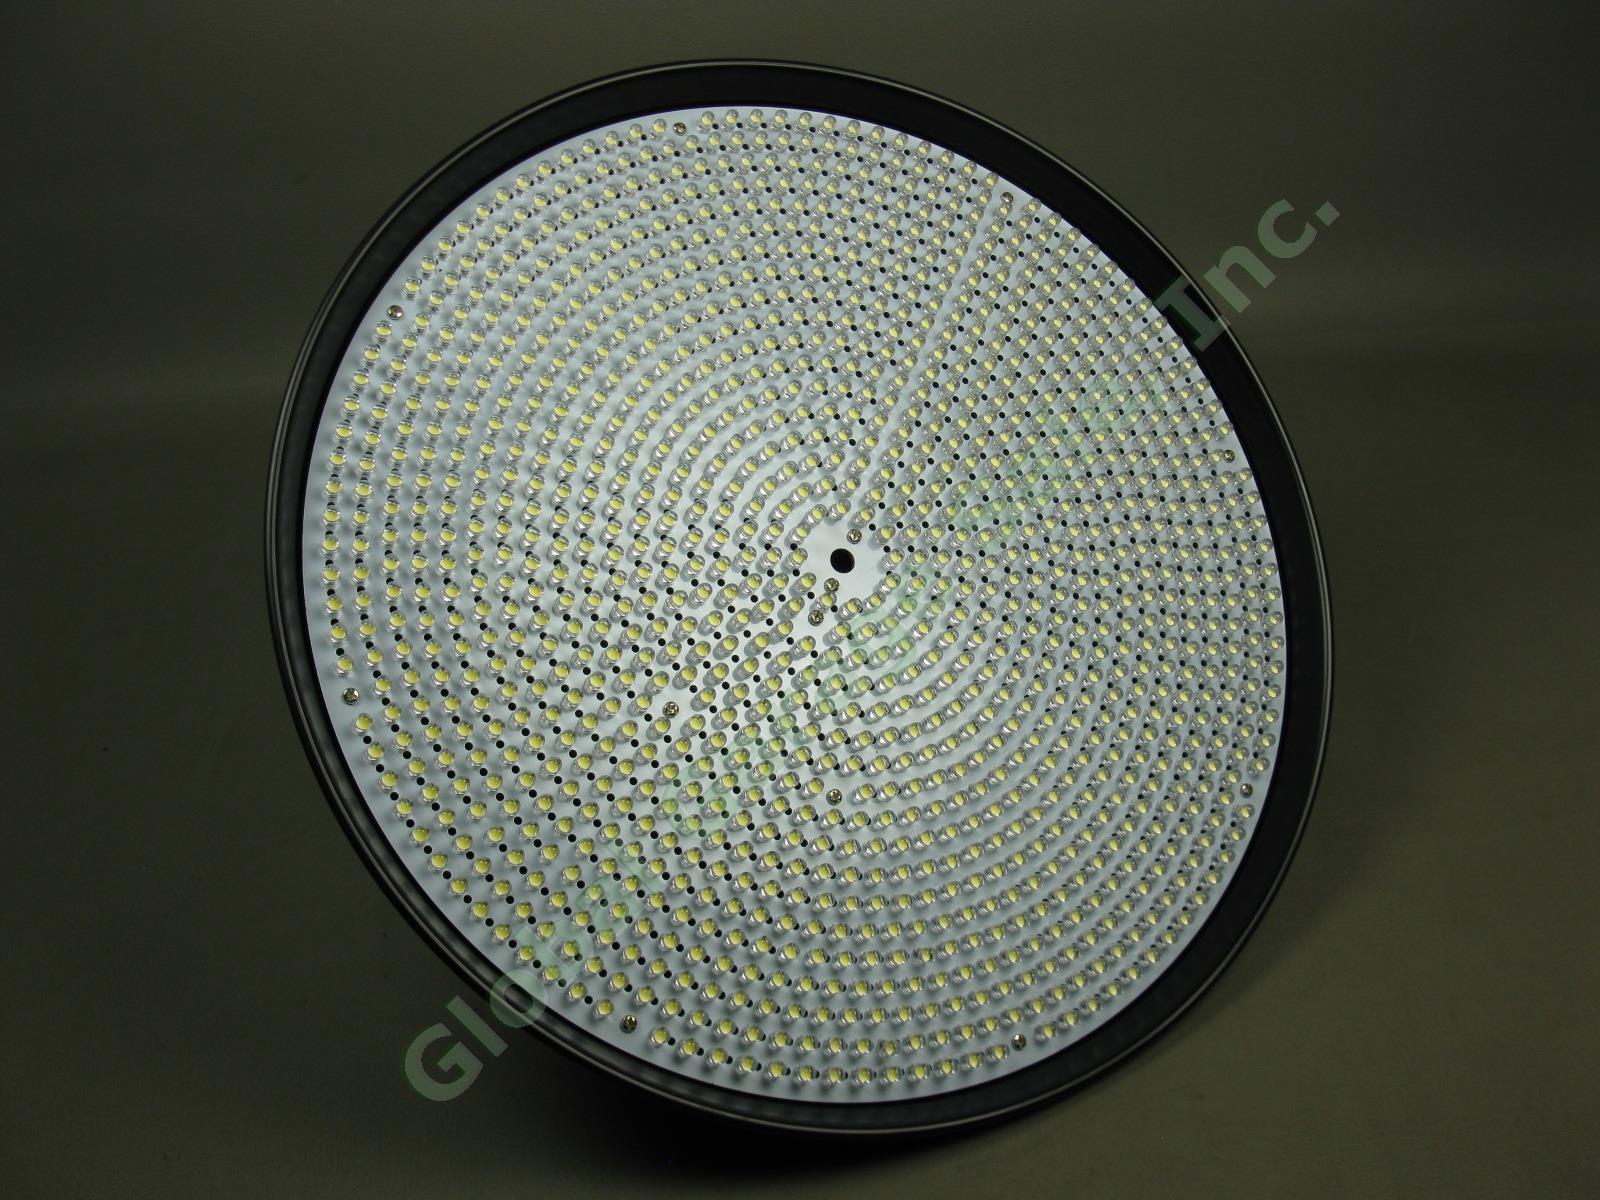 Genaray SpectroLED-14 75W AC/DC Daylight Balanced 5600K LED Light SP-AD75 $274 6